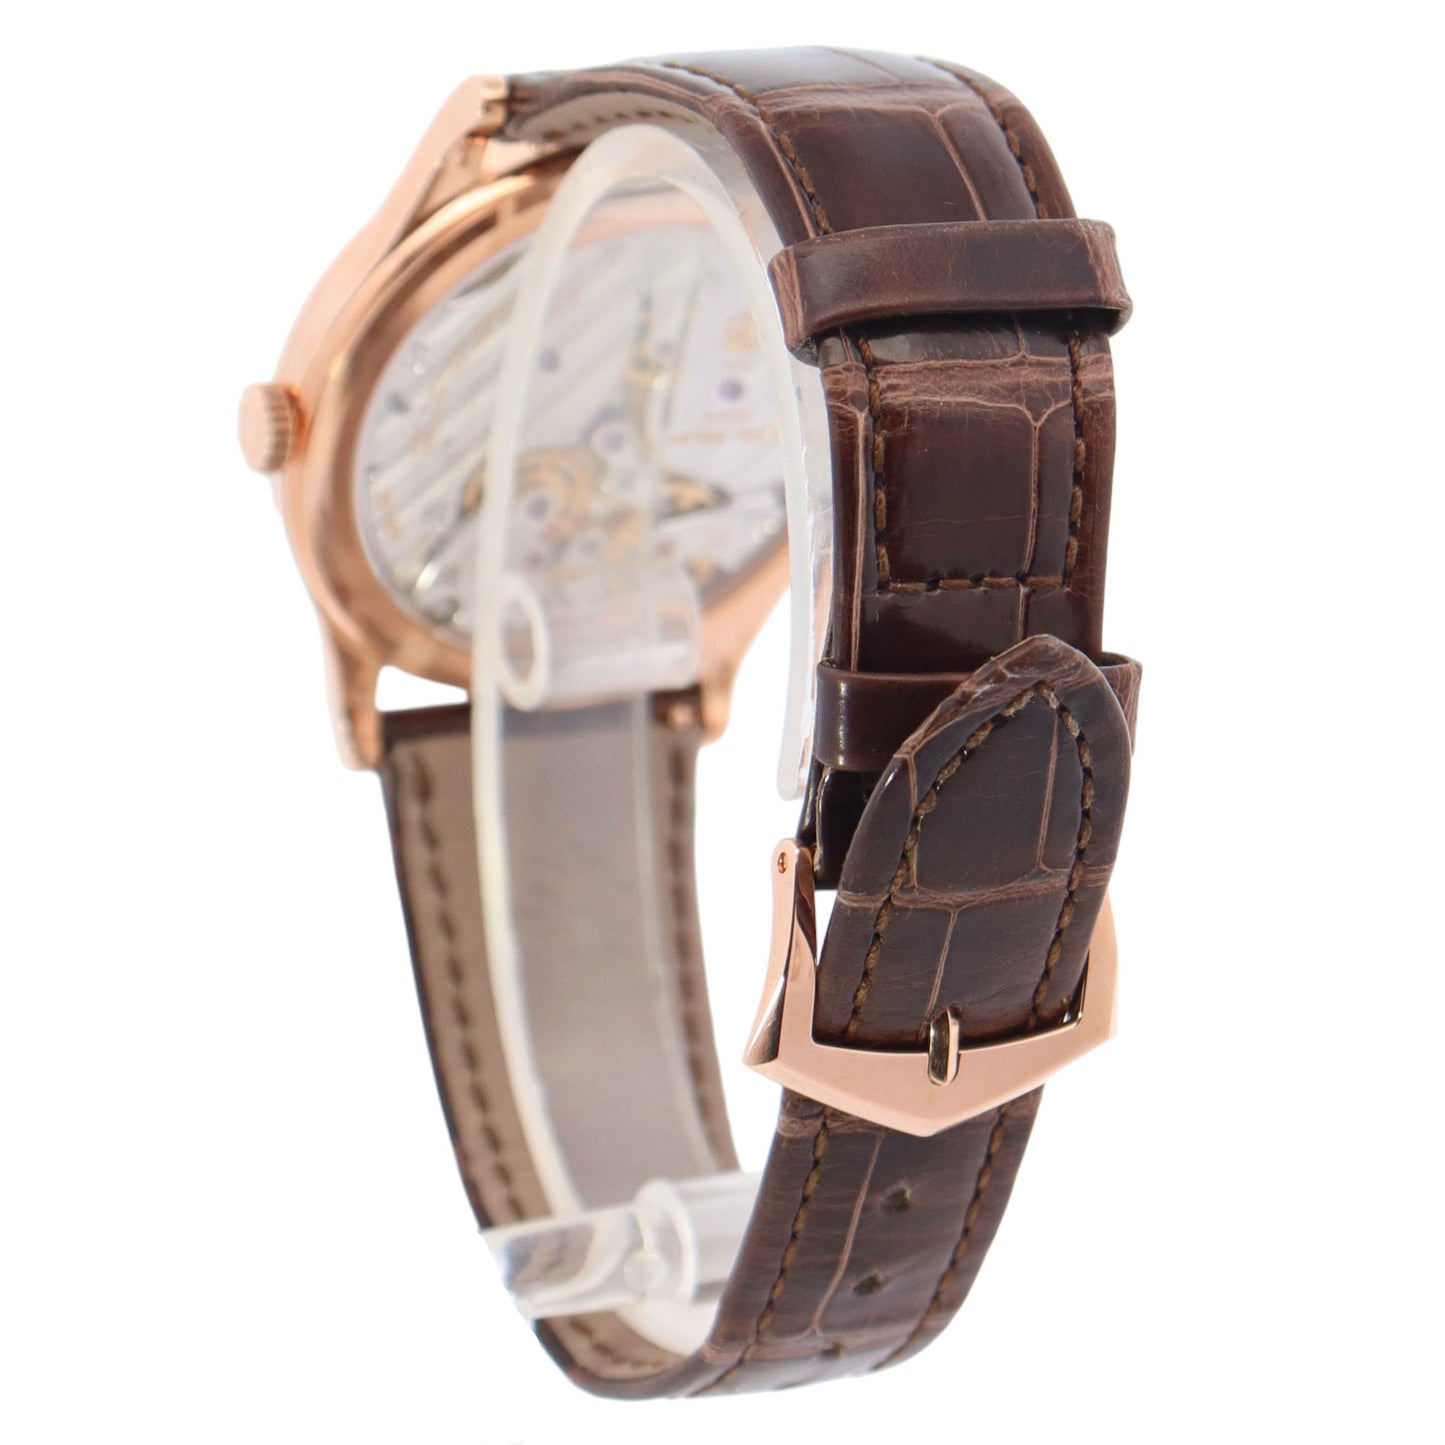 Patek Philippe Calatrava Rose Gold 39mm White Stick Dial Watch Reference# 6119R-001 - Happy Jewelers Fine Jewelry Lifetime Warranty